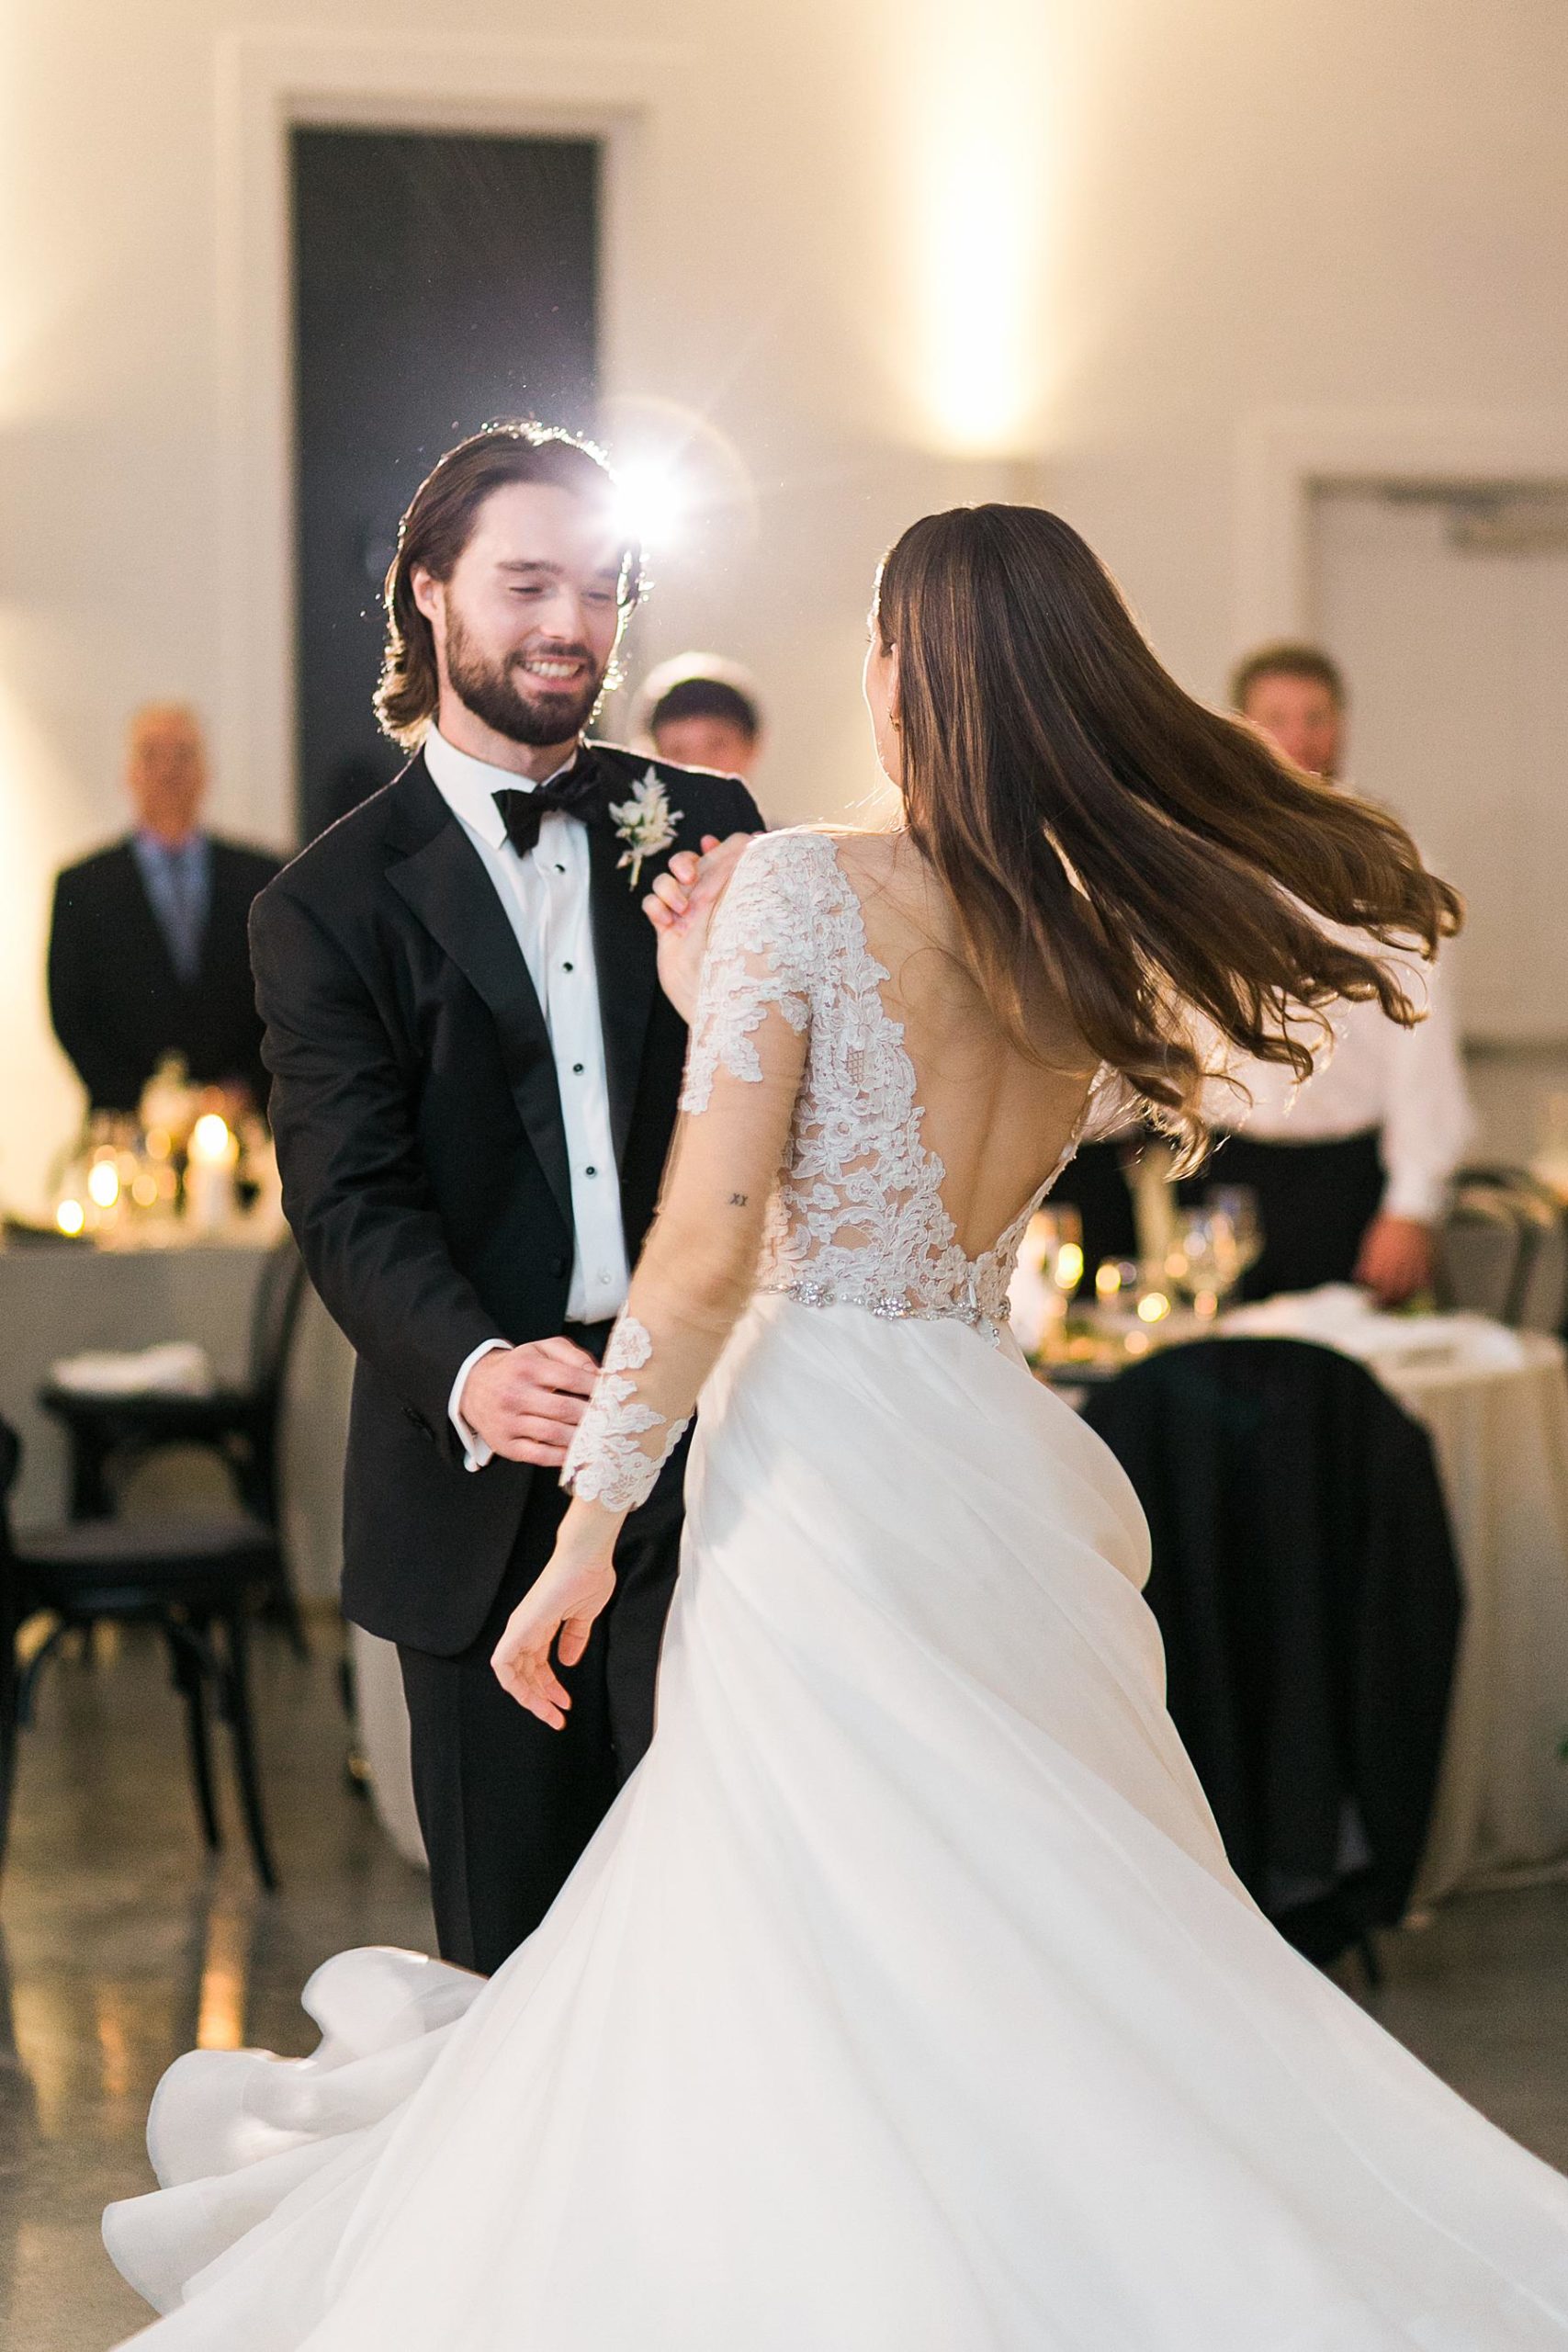 couple dancing reception at hutton house wedding venue in minneapolis minnesota